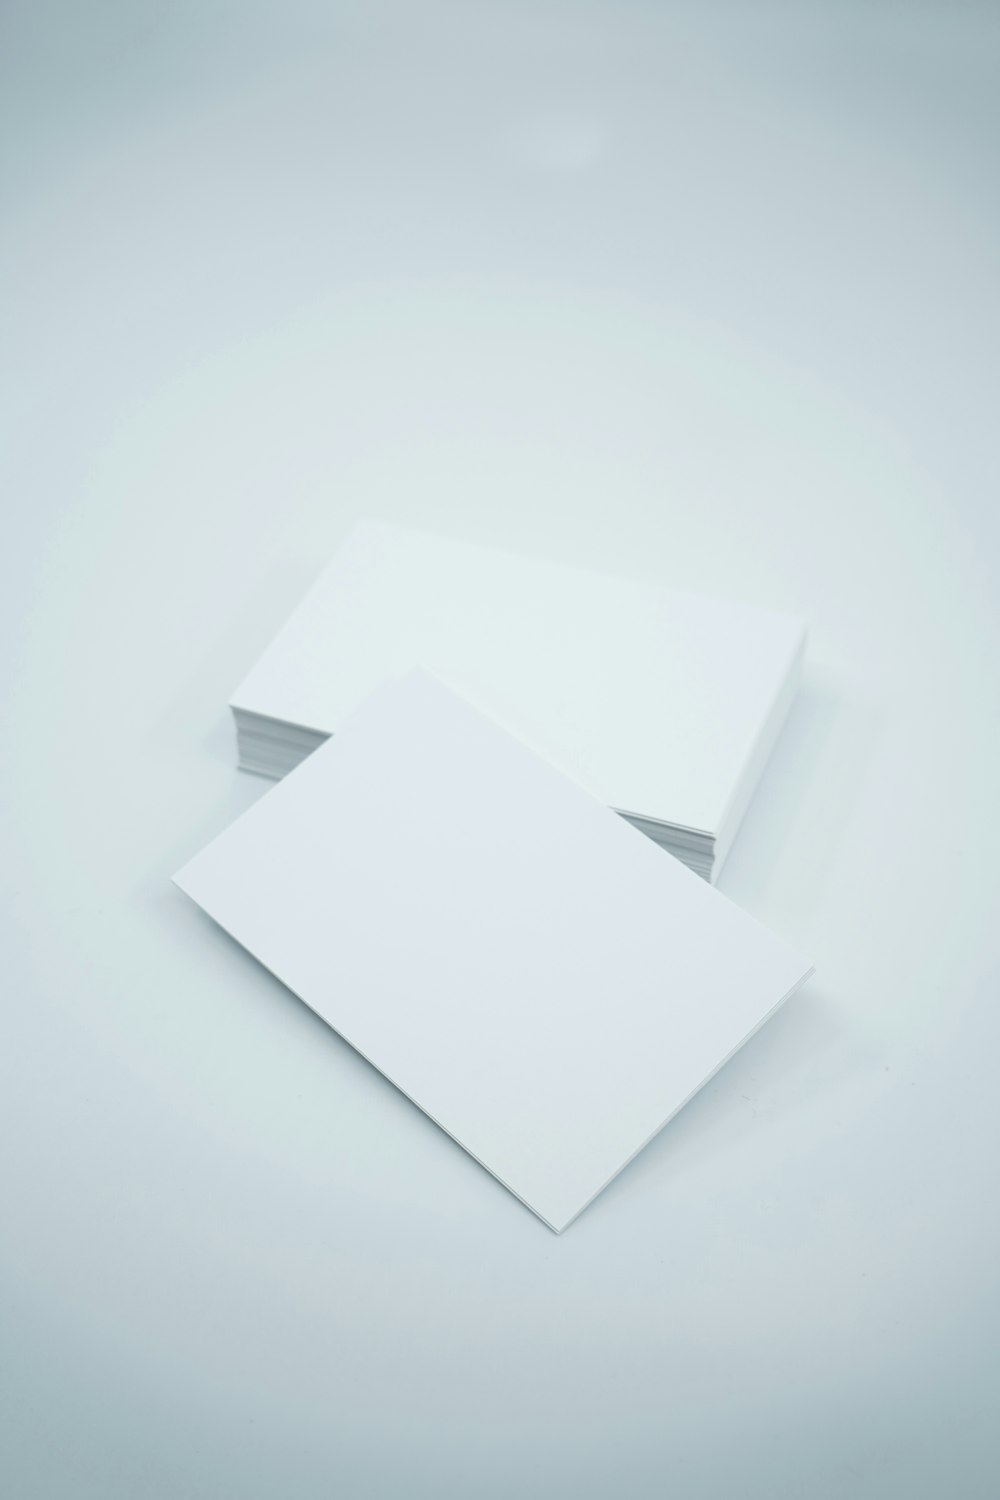 Due fogli di carta bianchi su sfondo bianco